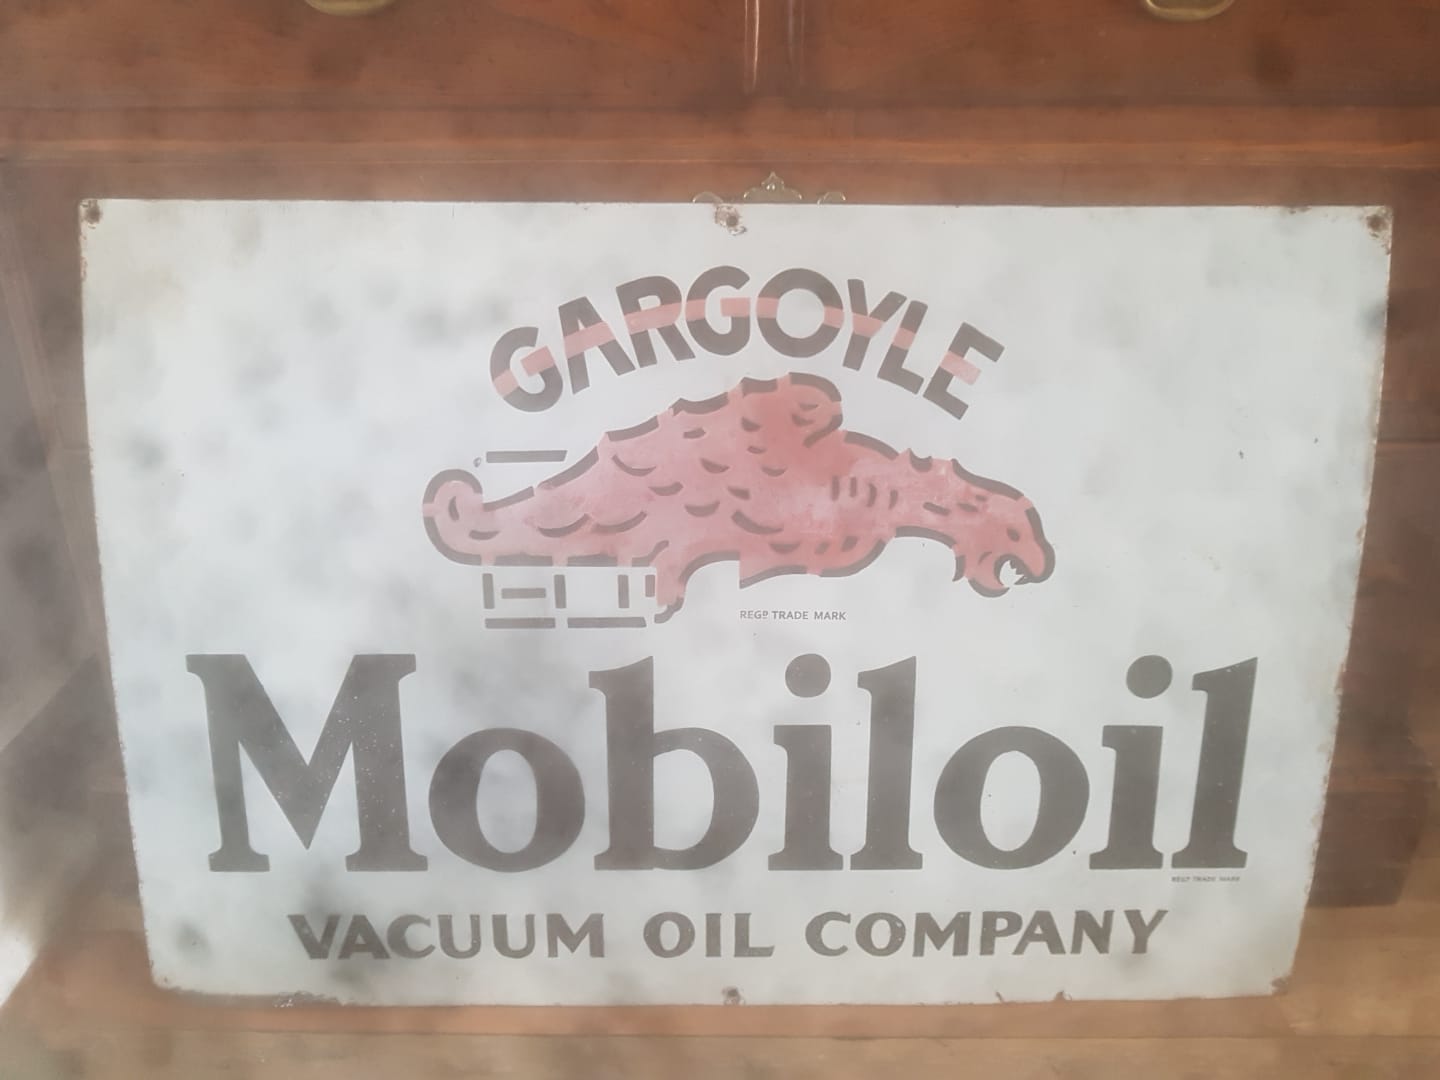 Gargoyle Mobiloil Enamel sign for sale Evoke Classics FREE Classified Ads